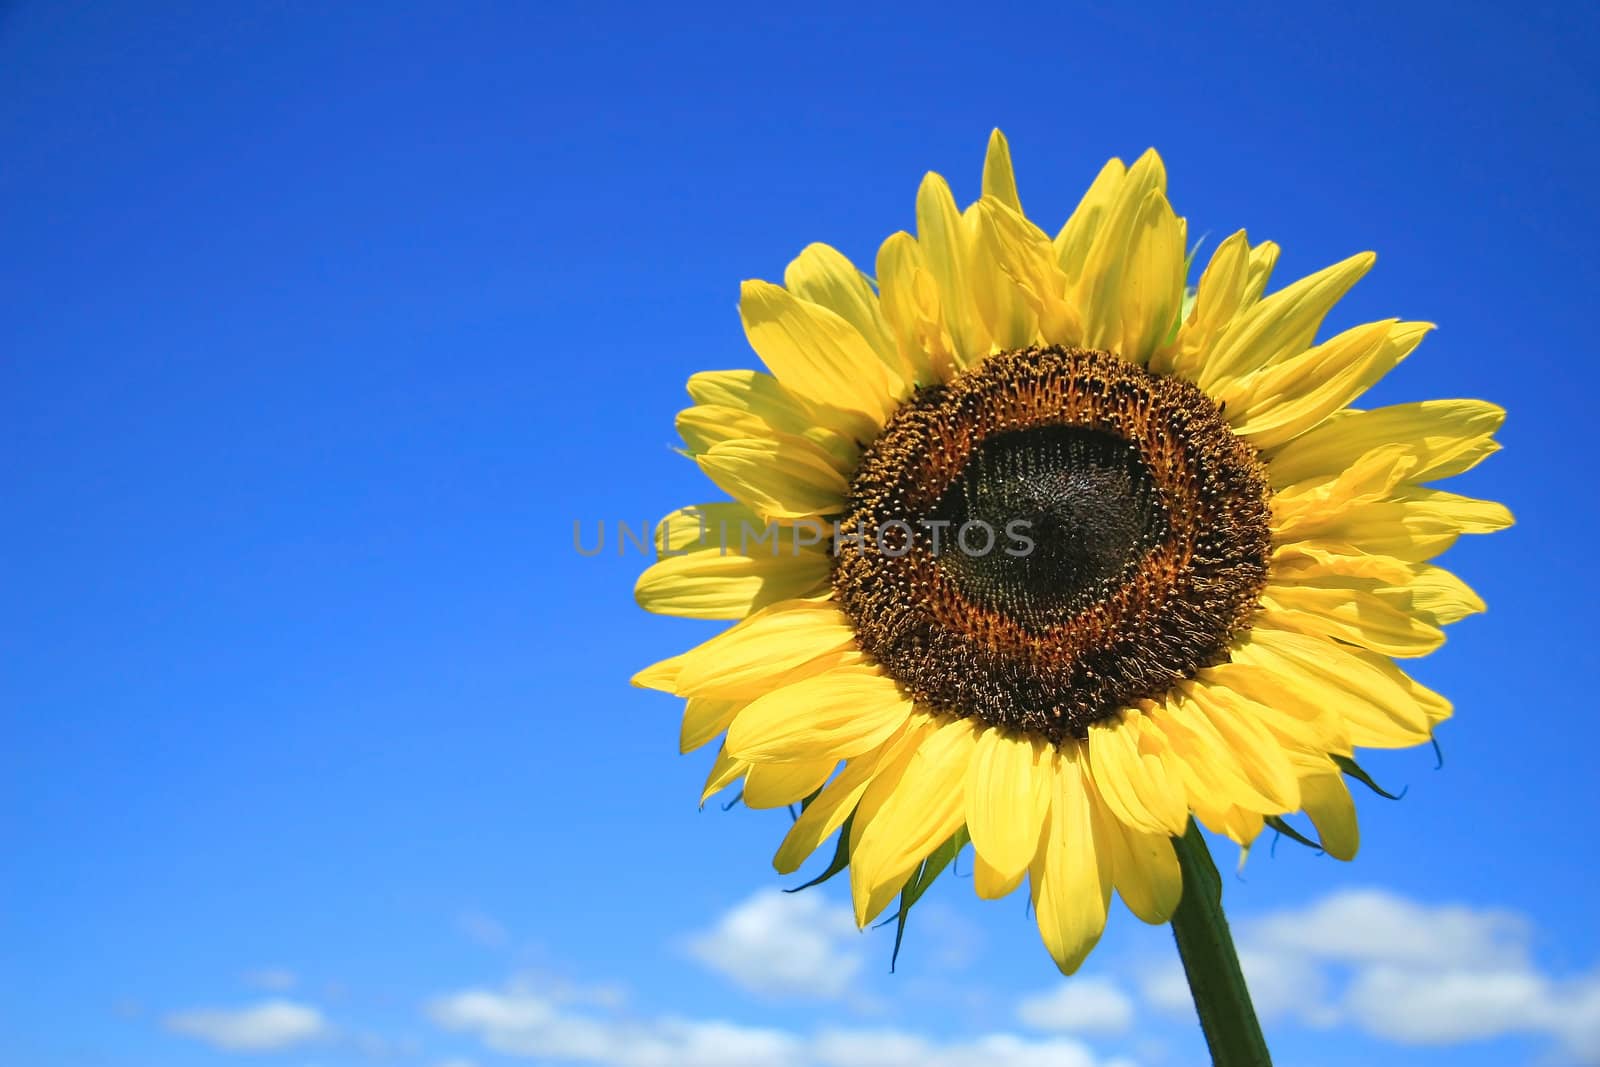 Golden sunflower  against a blue sky